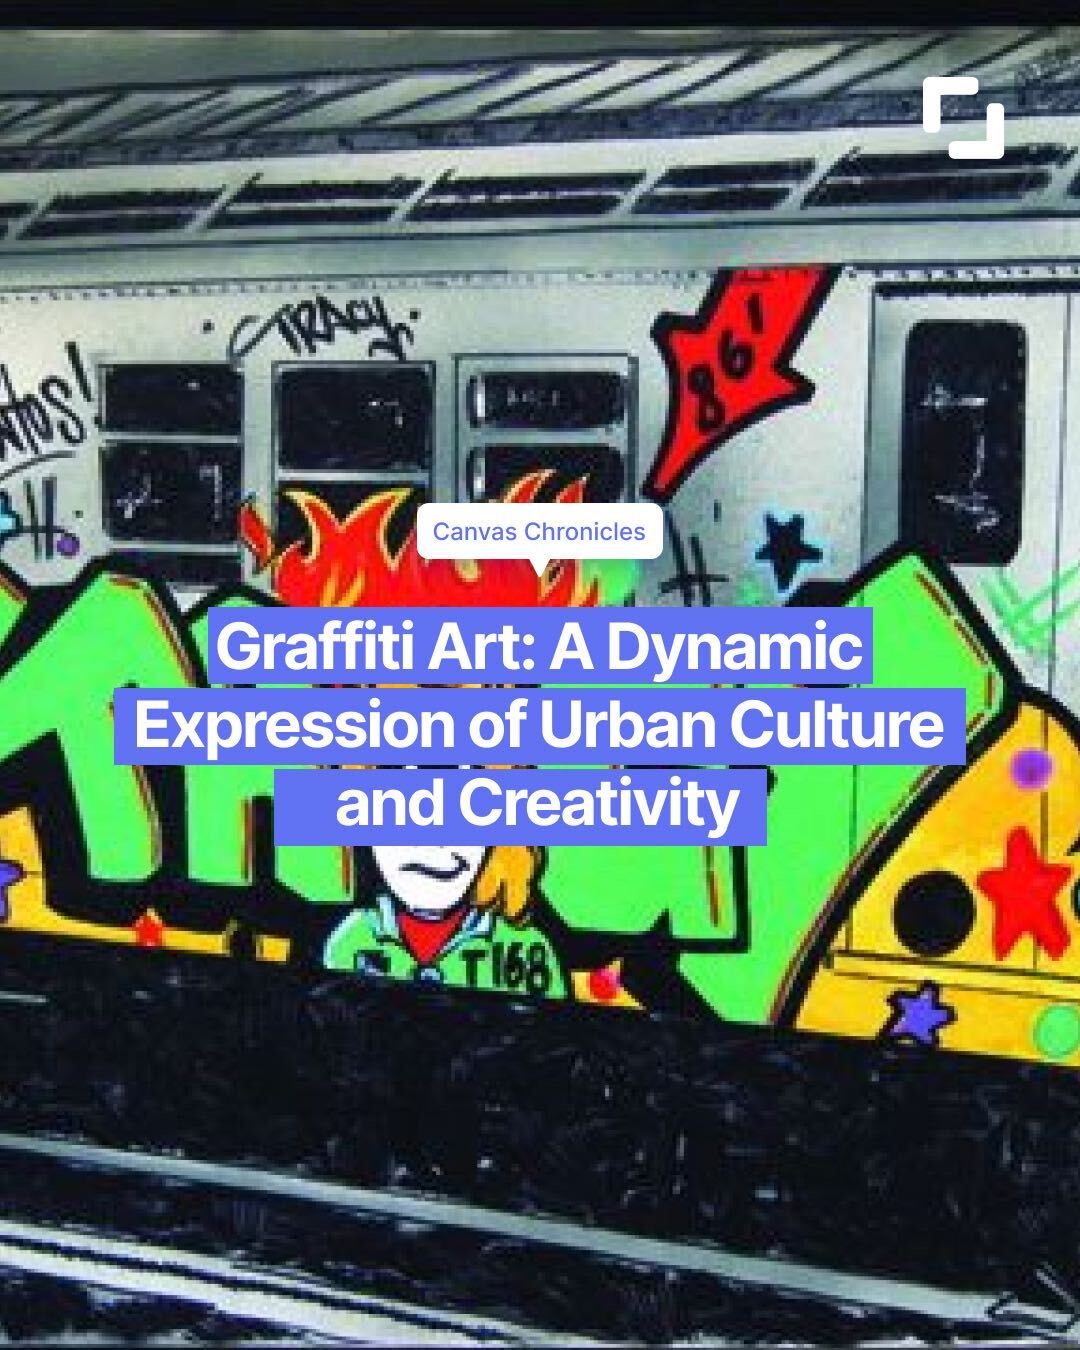 Graffiti Art: A Dynamic Expression of Urban Culture and Creativity